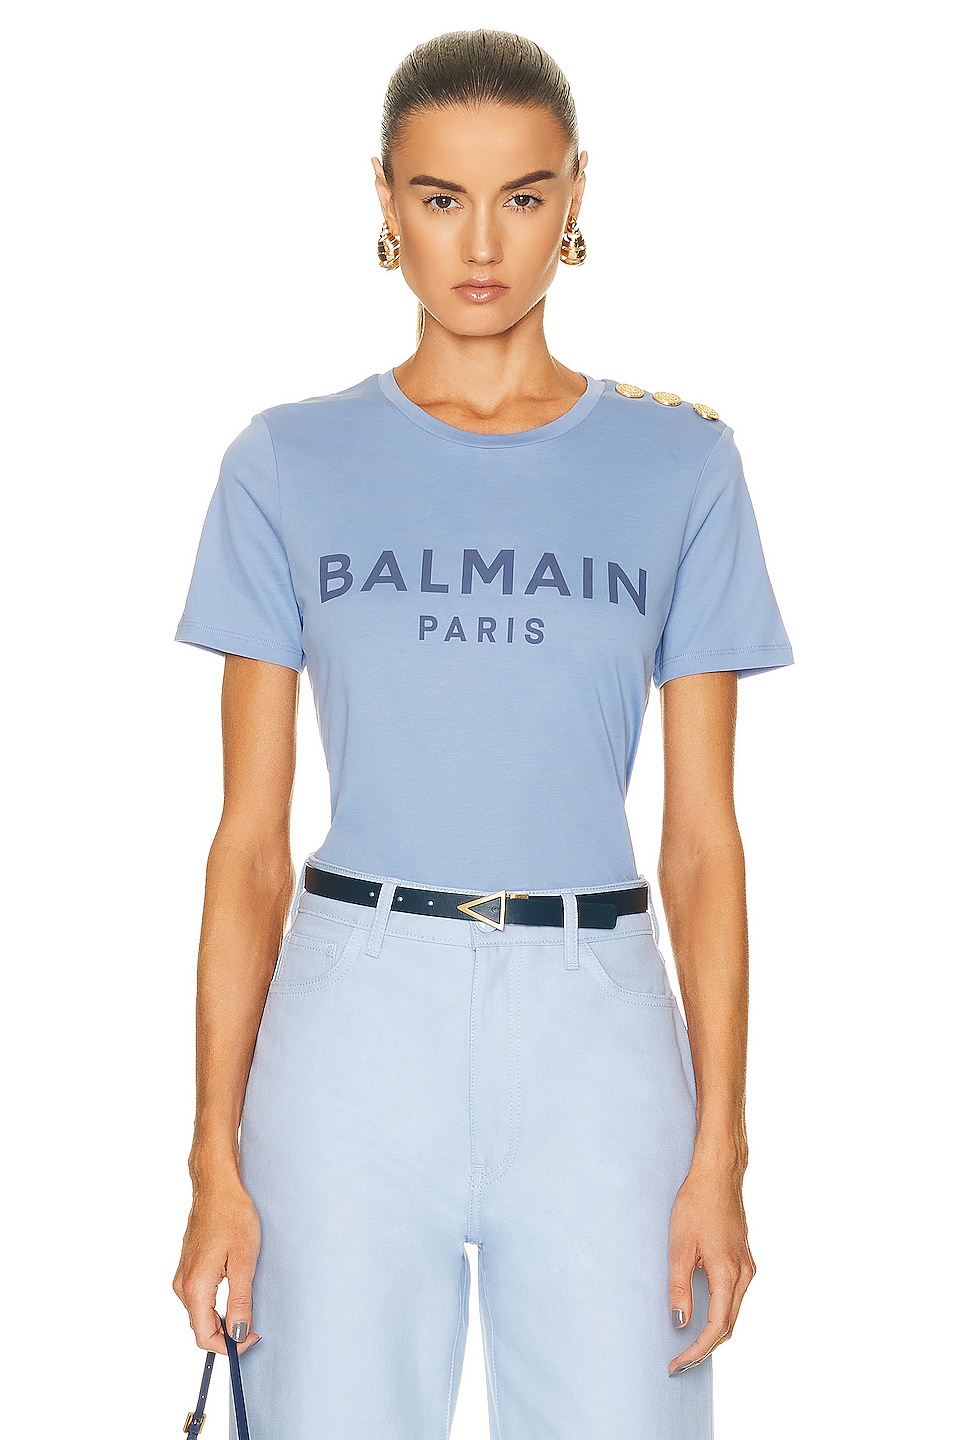 Image 1 of BALMAIN Printed Balmain T-shirt in Bleu Clair & Bleu Denim